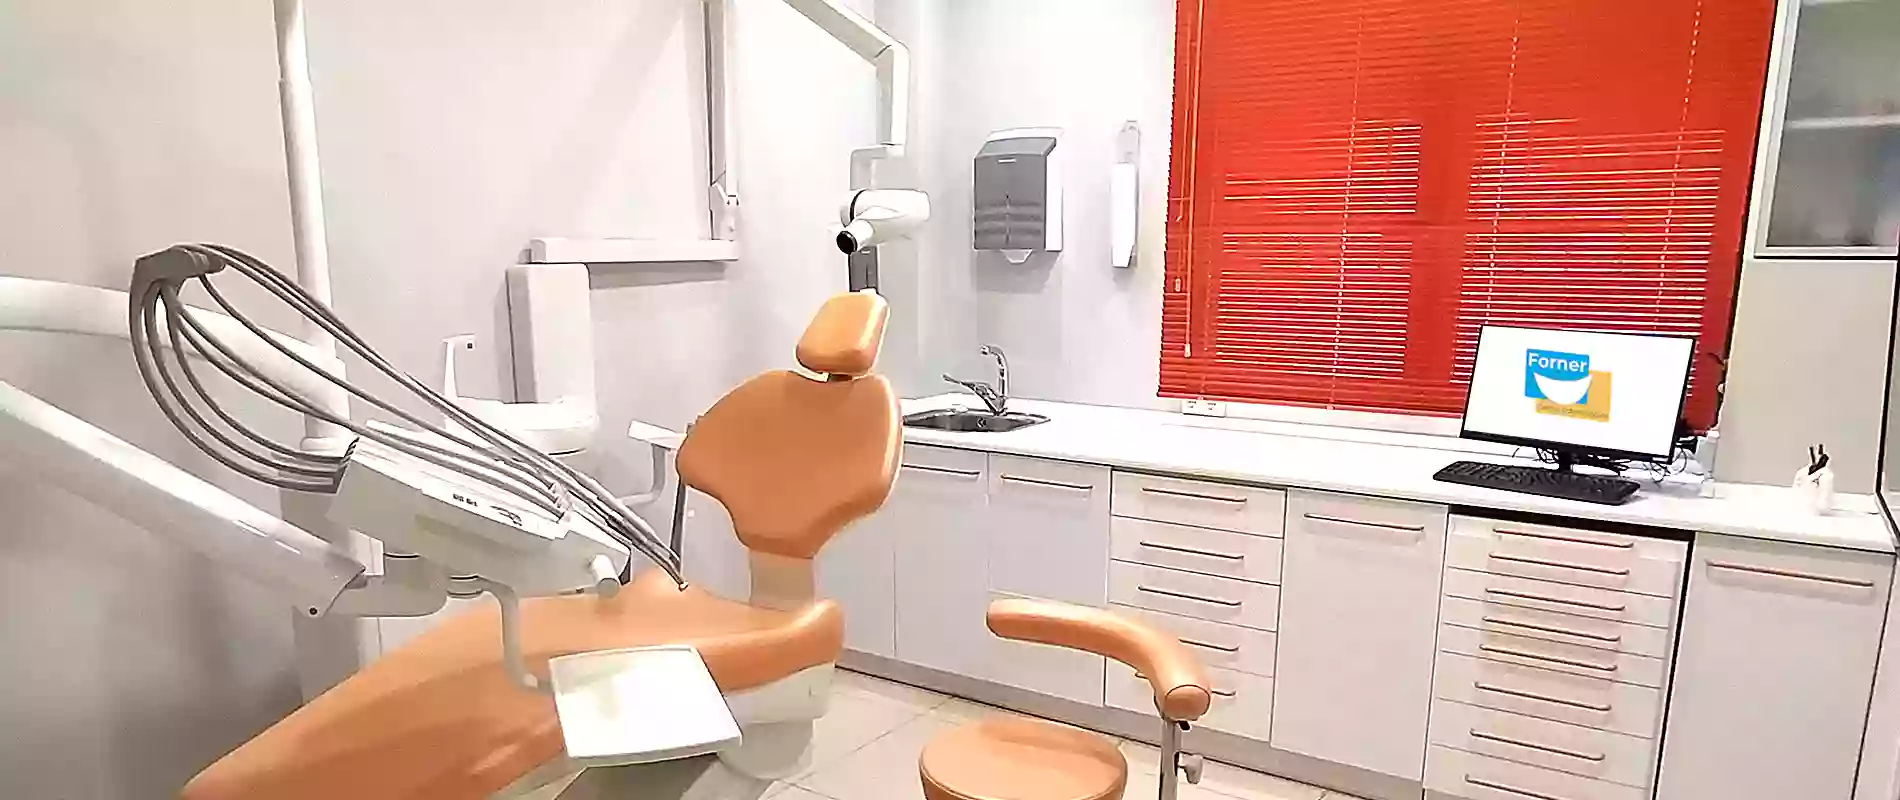 Centro Odontologico Forner -Dra. Carmen Forner- ATM, Periodoncia, Rejuvenecimiento Labial